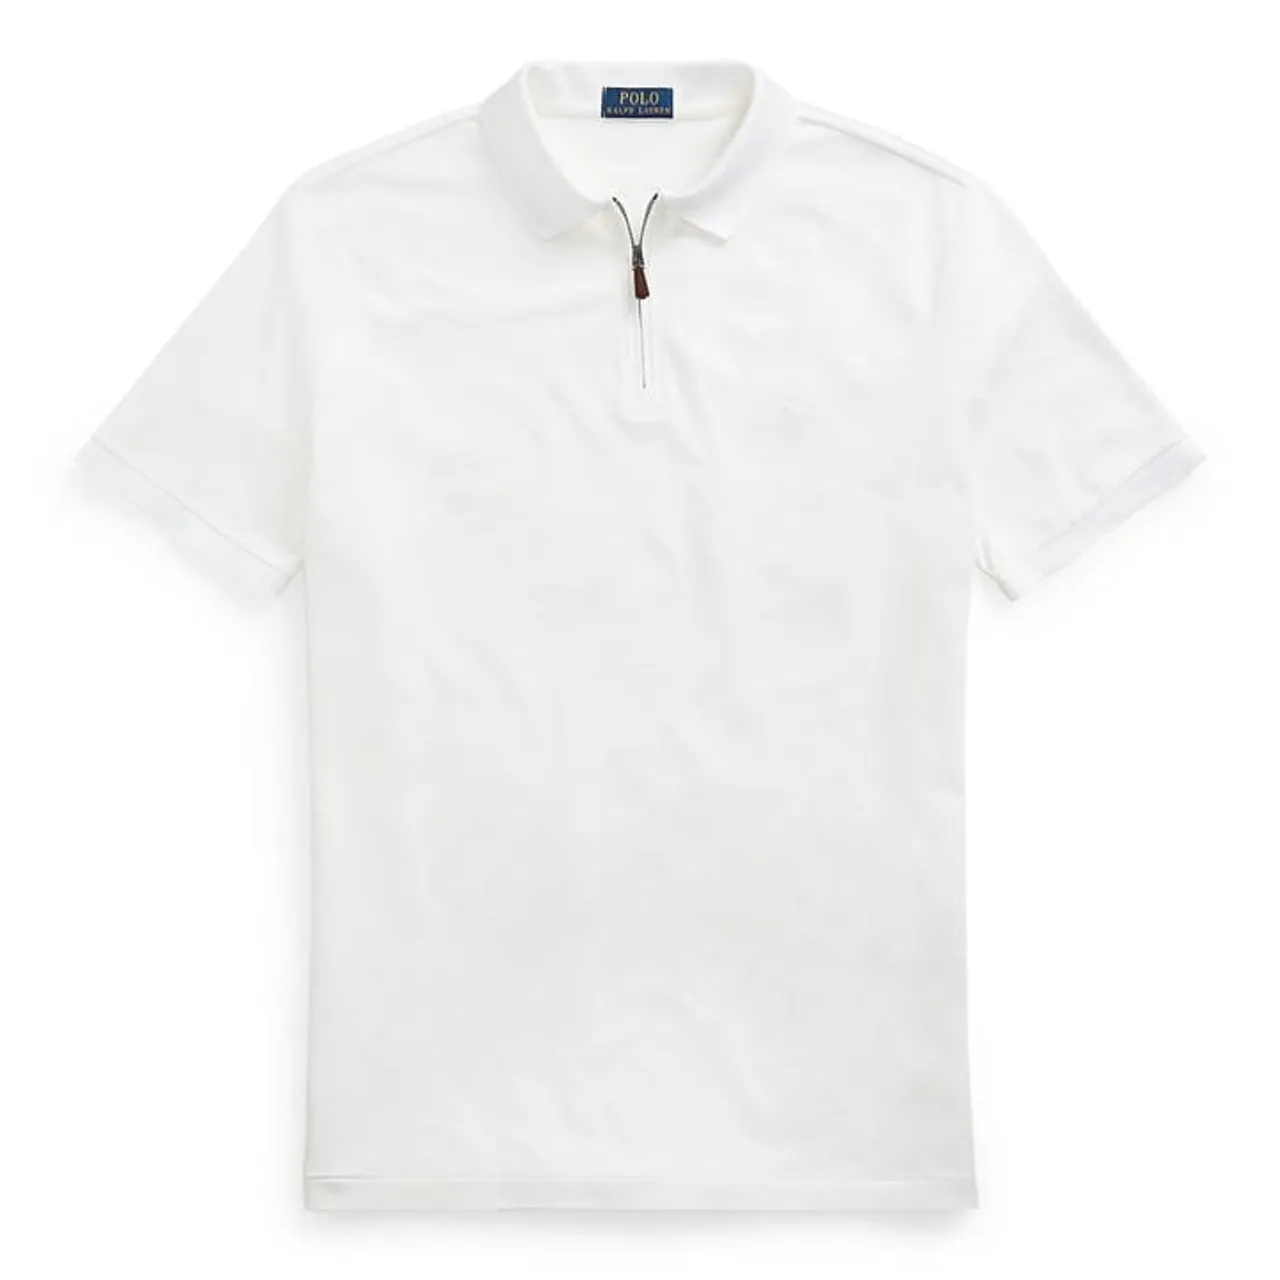 Polo Ralph Lauren Tipped Polo Shirt - White